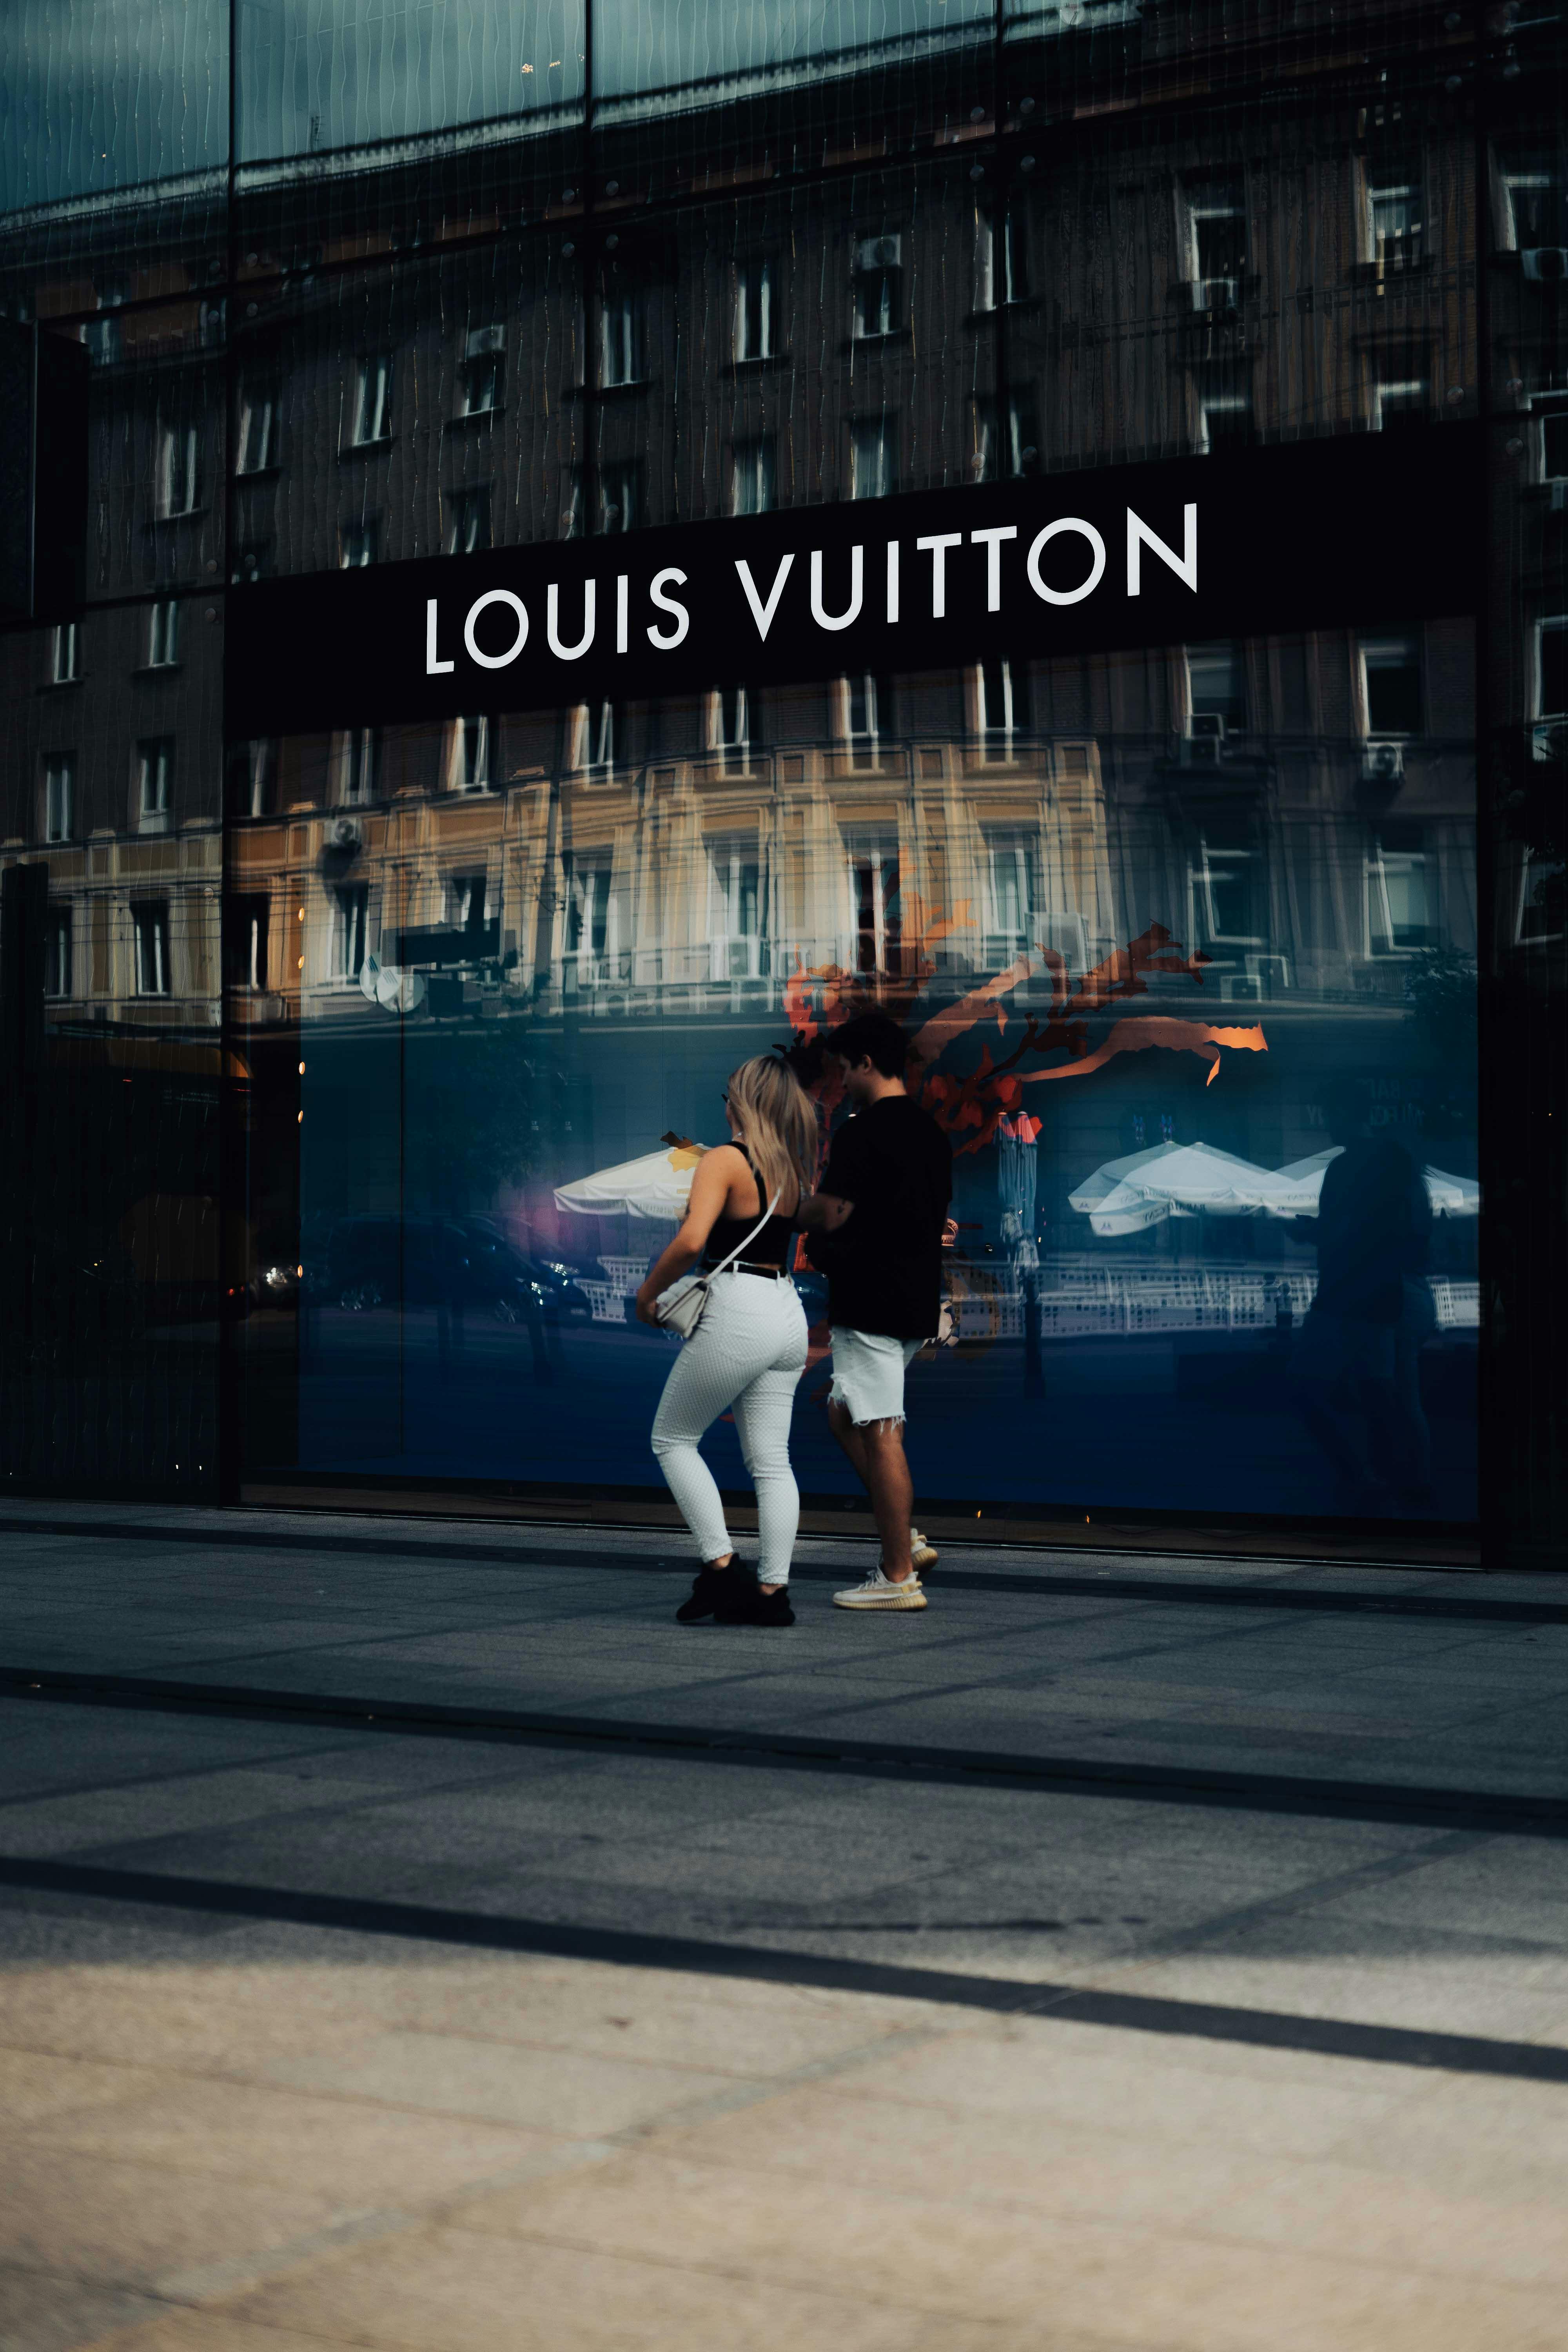 People Walking Near the Louis Vuitton Building · Free Stock Photo